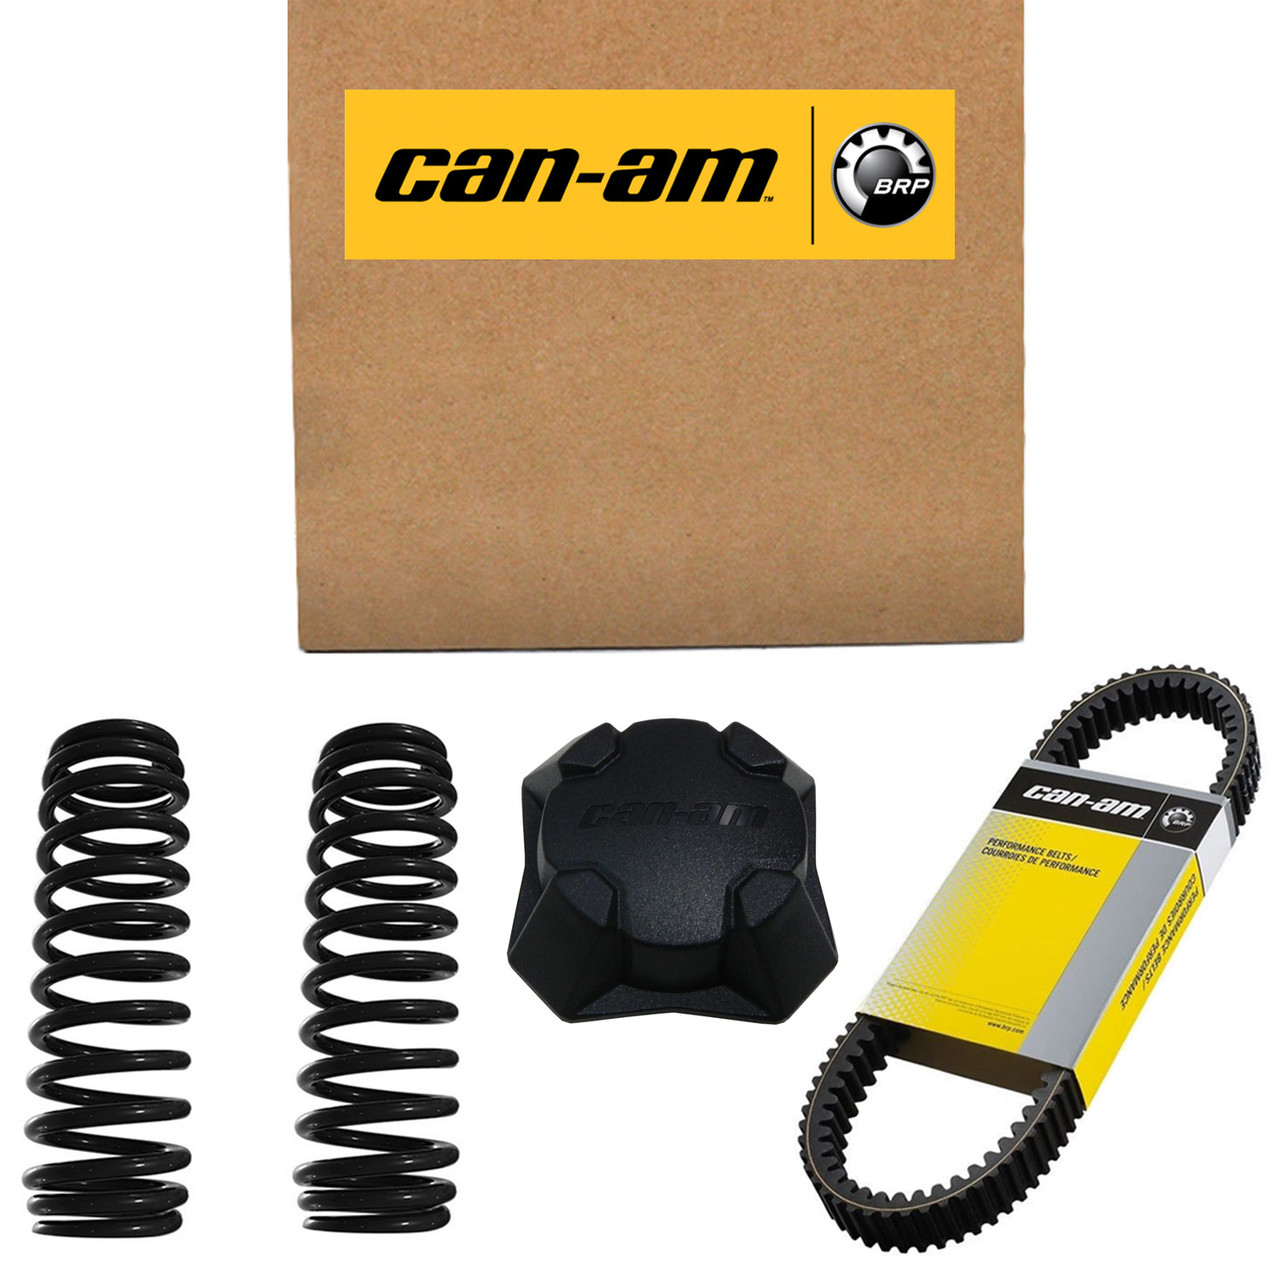 Can-Am New OEM Gear Box, 420684783